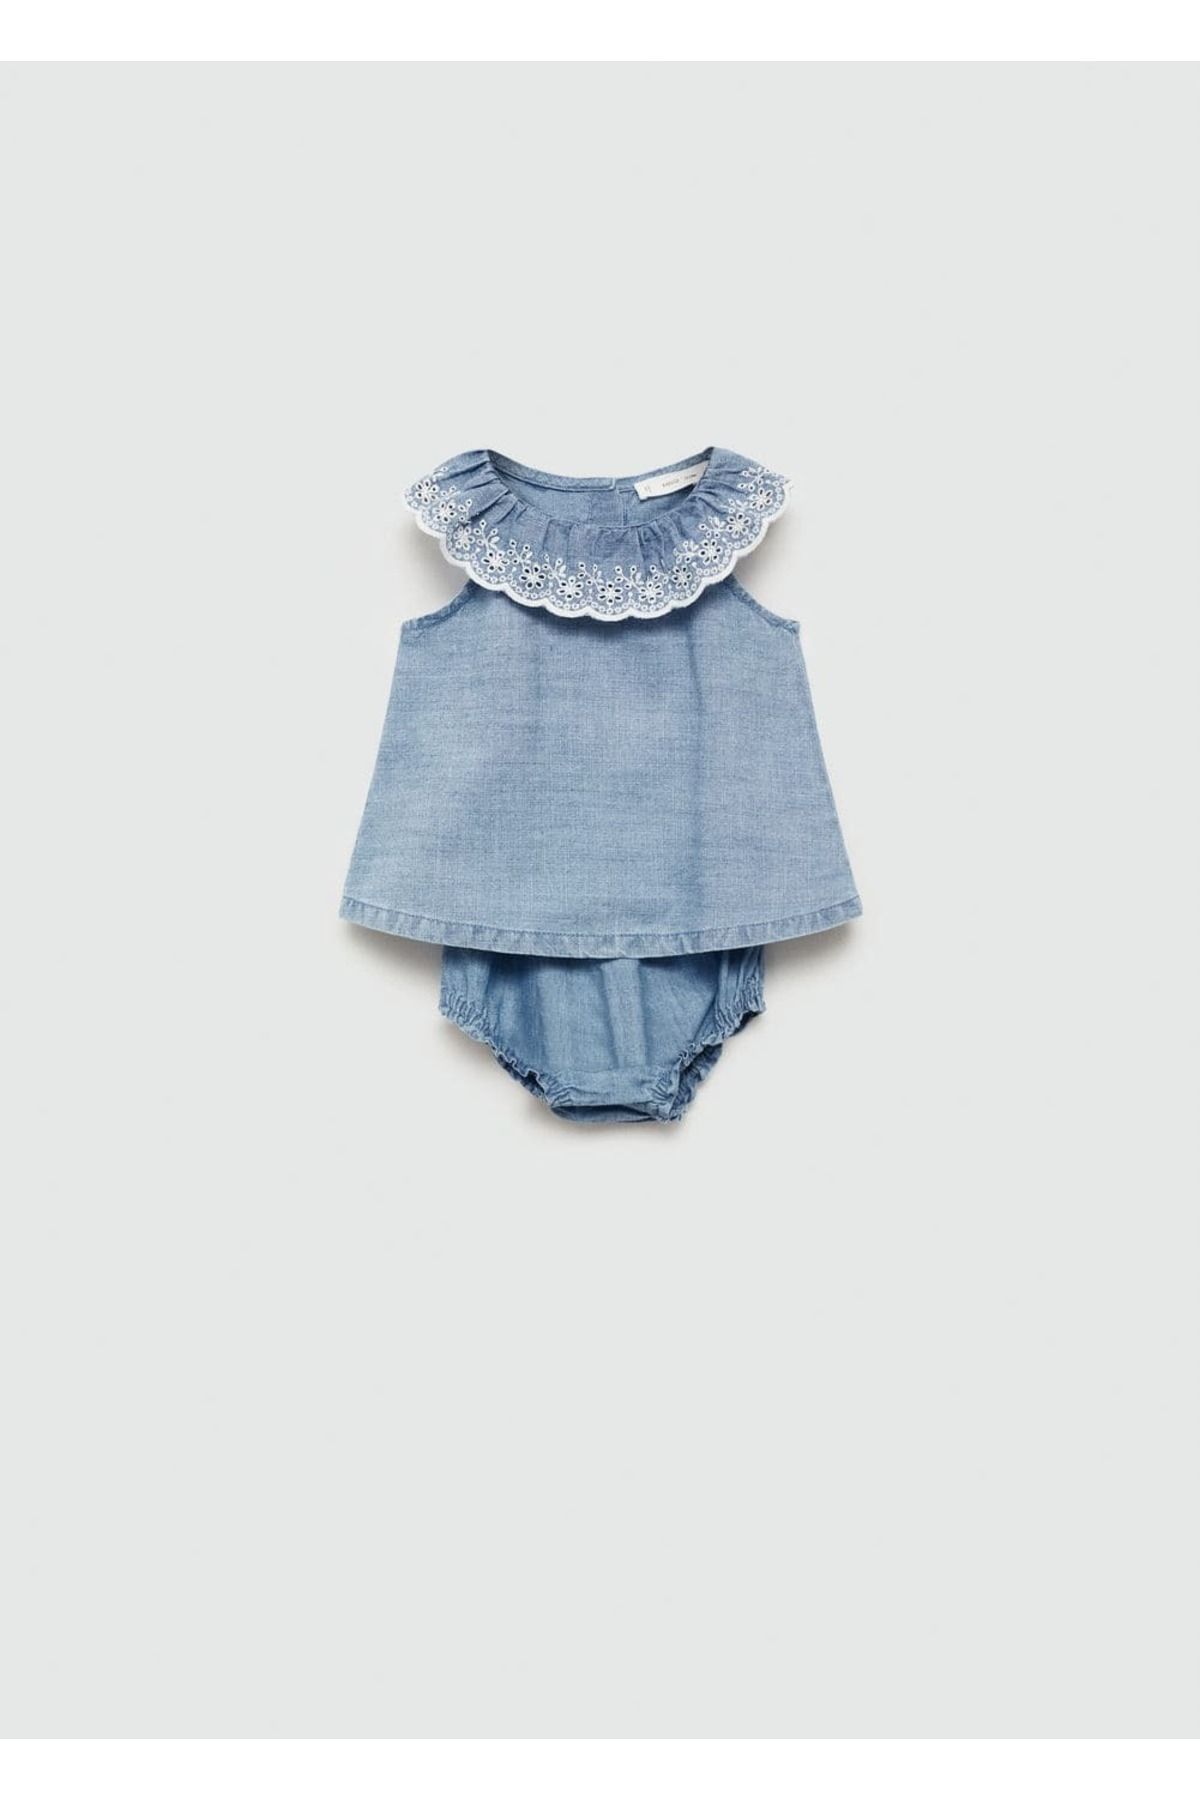 MANGO Baby Pamuklu külotlu elbise